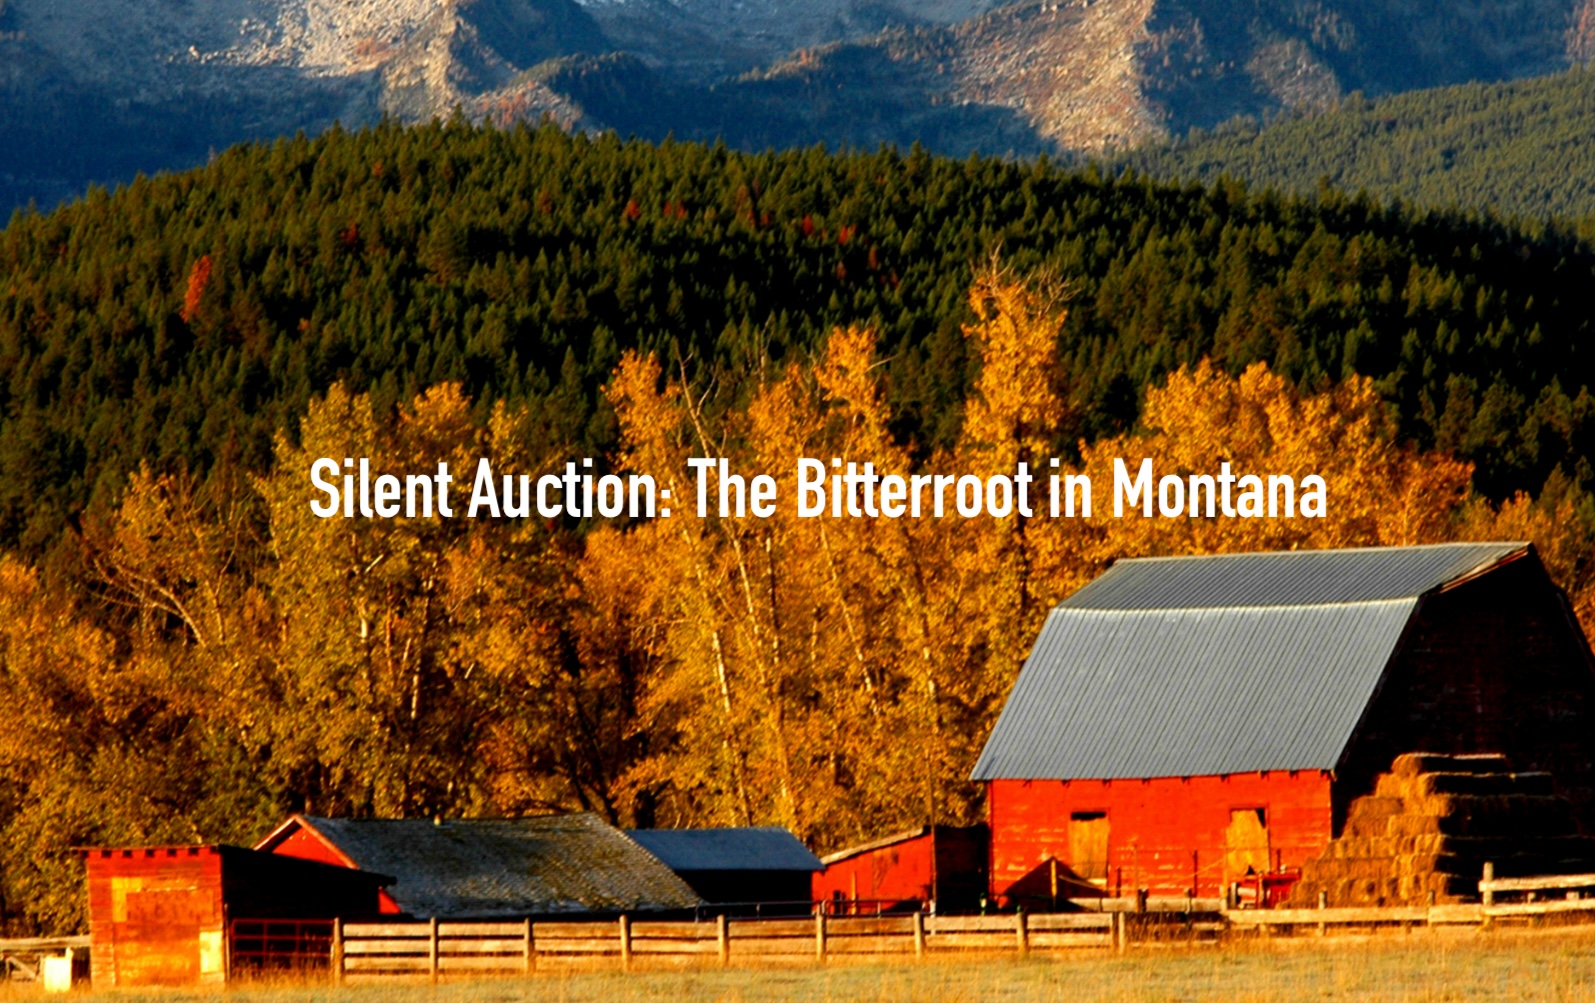 SHHS silent auction item Montana's bitterroot